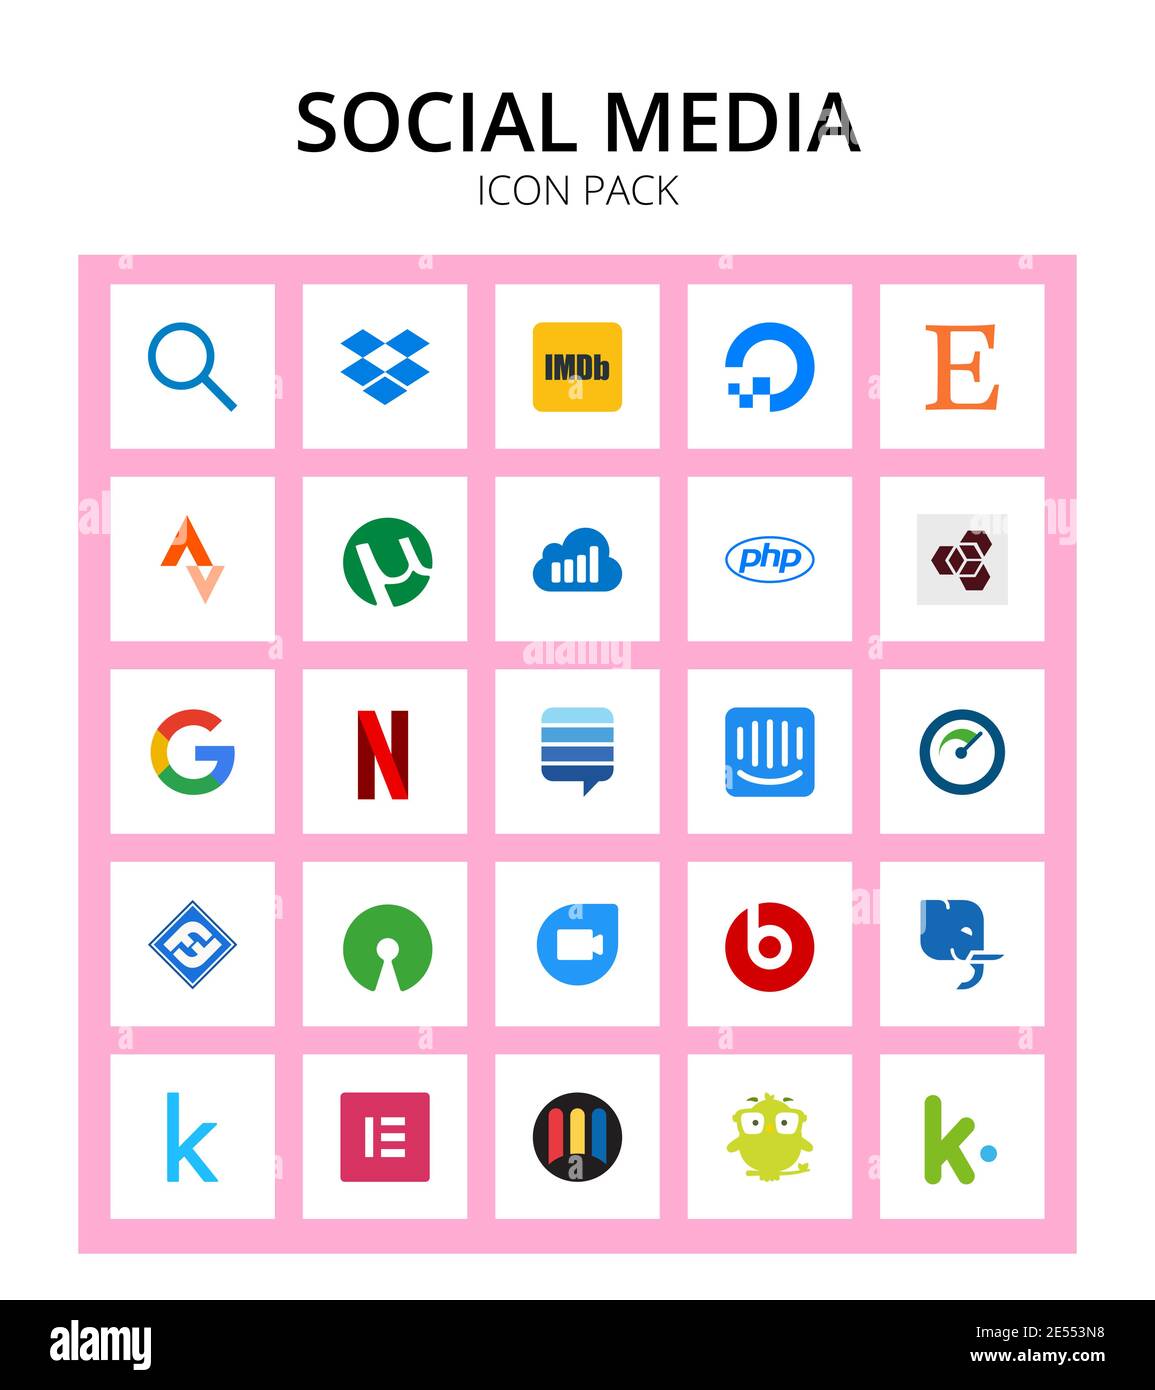 SocialMedia échelle, échange, sellsy, stack, google Editable Vector Design Elements Illustration de Vecteur